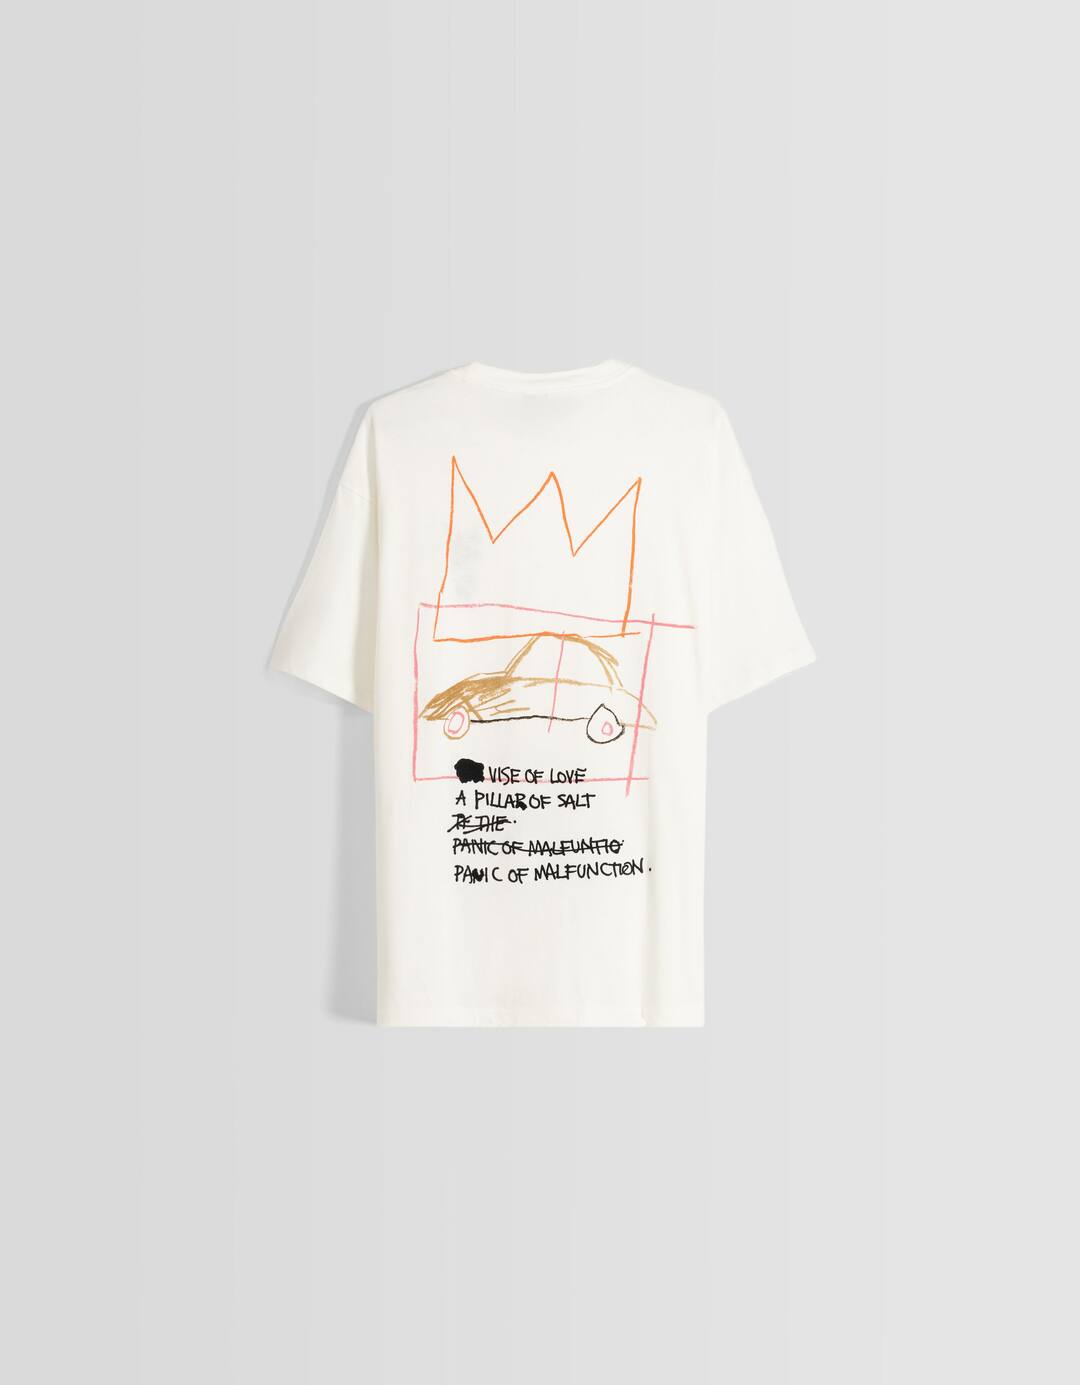 Jean-Michel Basquiat short sleeve boxy fit T-shirt